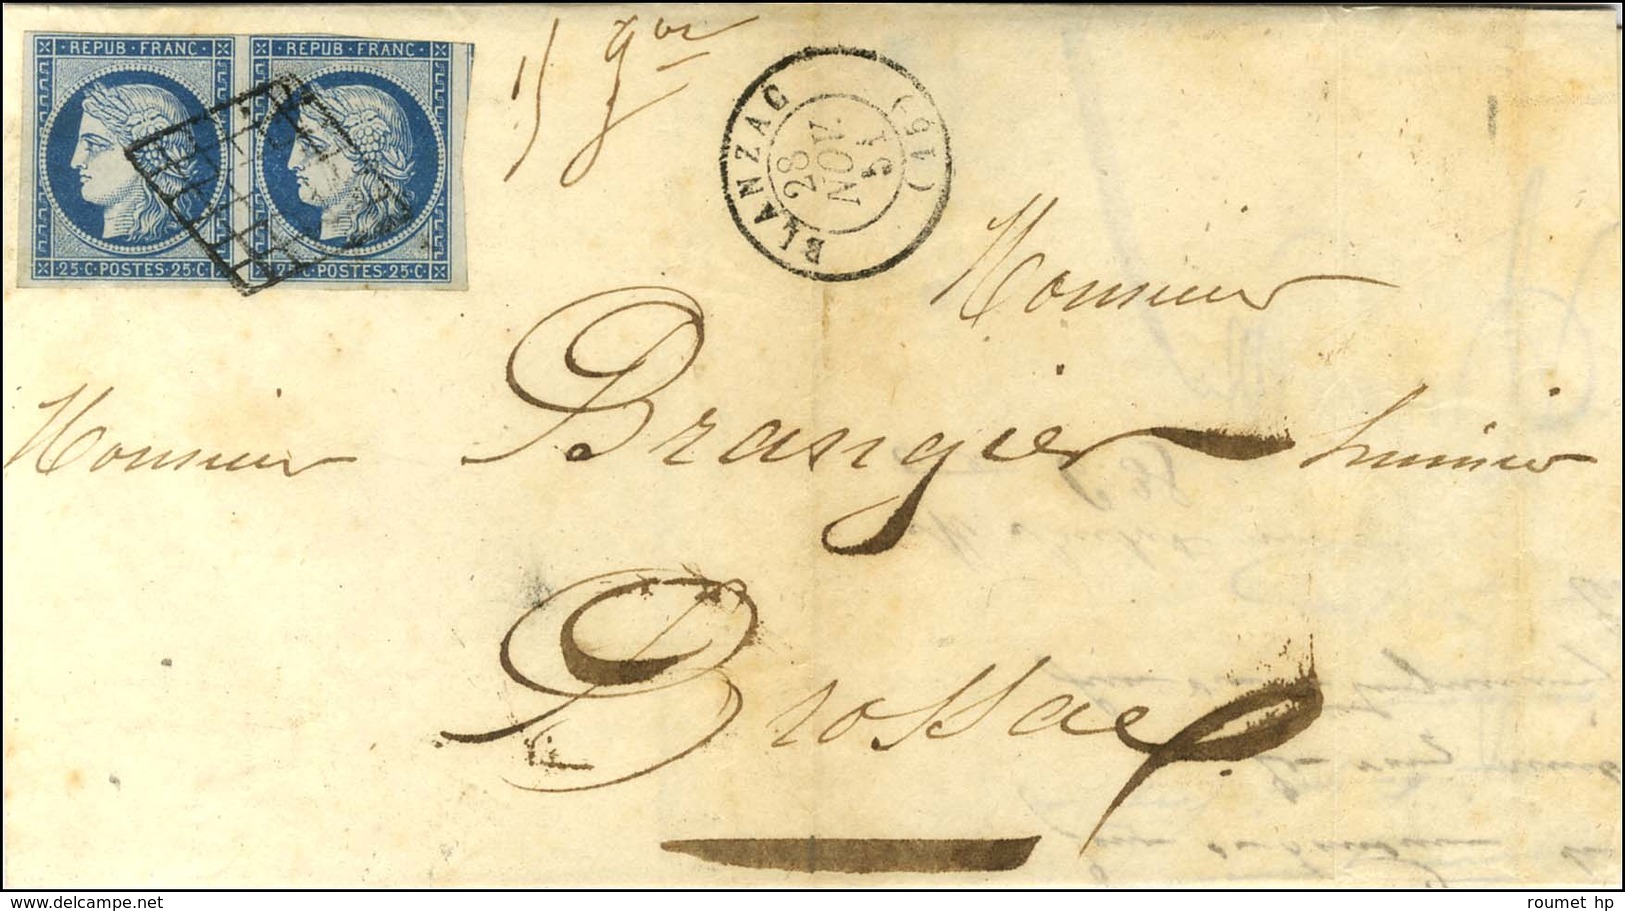 Grille / N° 4 Paire, 1 Ex Def Càd T 15 BLANZAC (15). 1851. - TB. - 1849-1850 Ceres